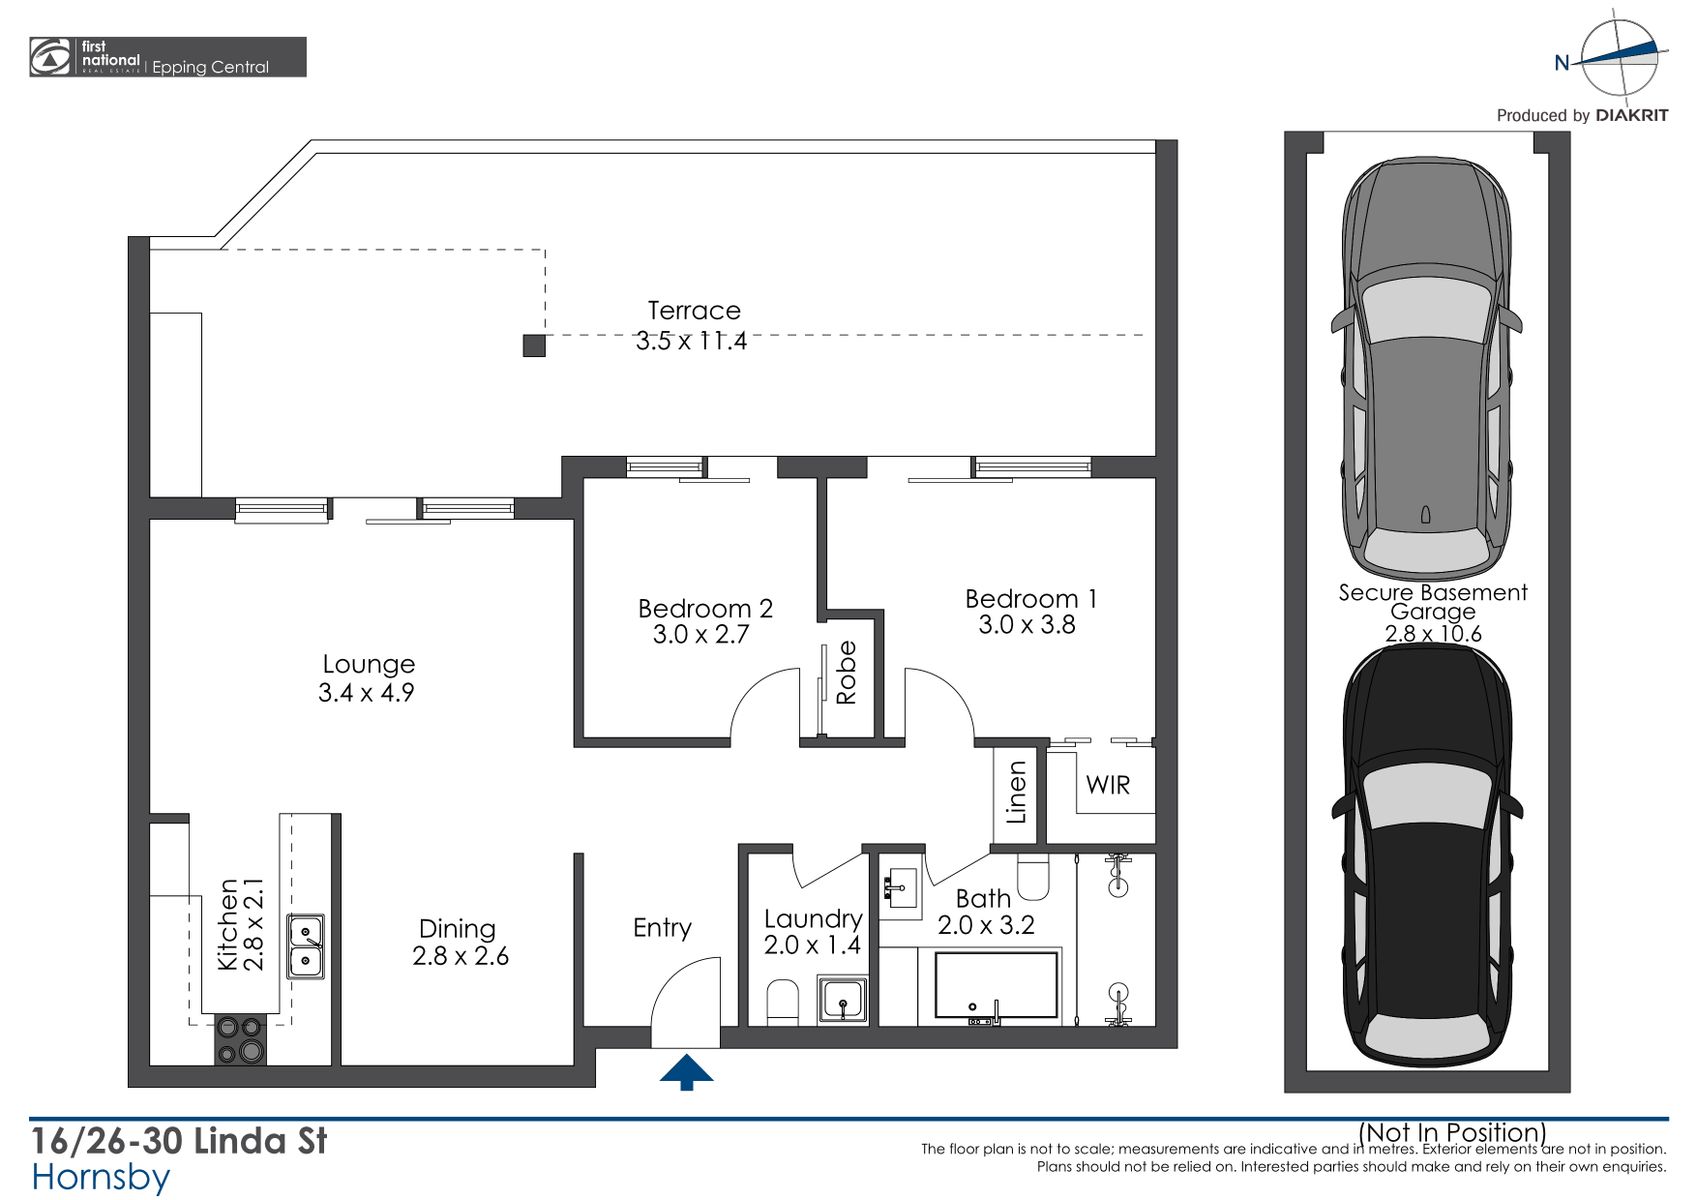 16 26 Linda St Hornsby Floorplan 2D web